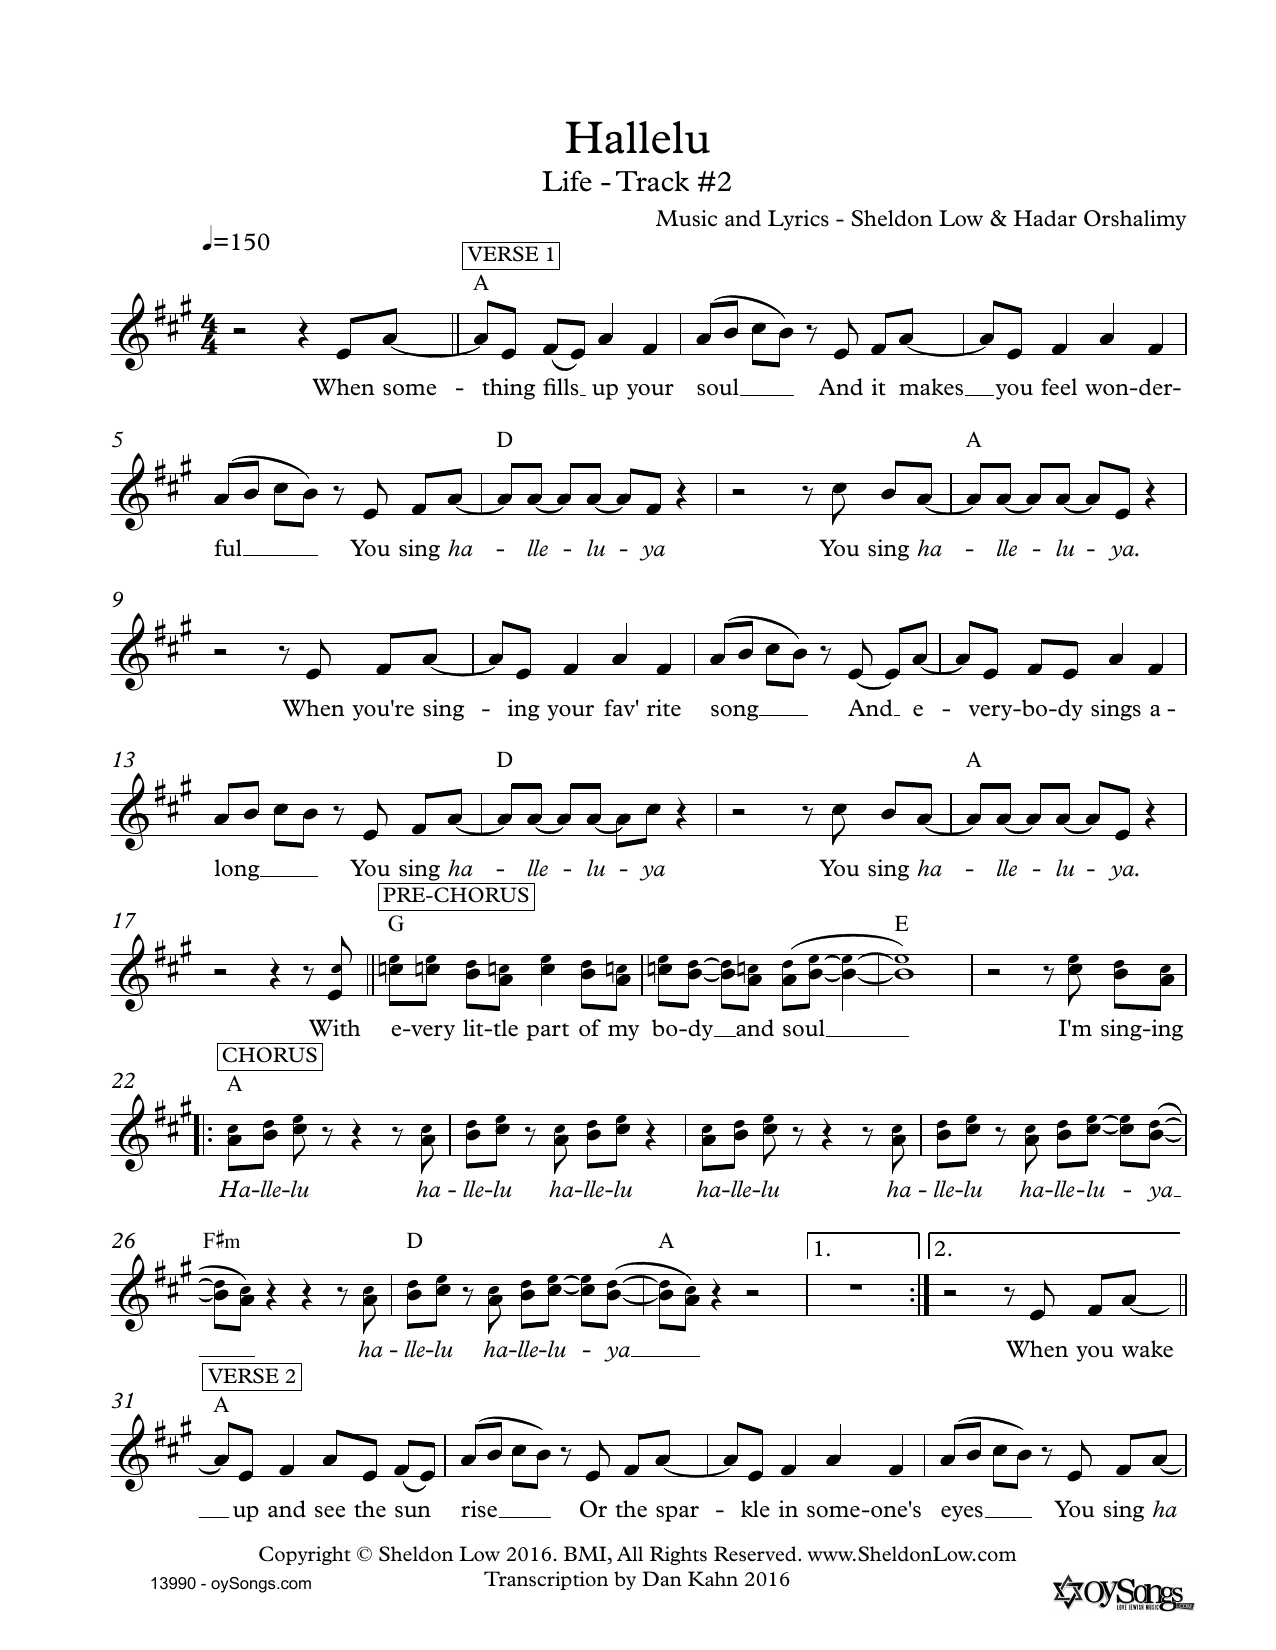 Sheldon Low Hallelu Sheet Music Notes & Chords for Lead Sheet / Fake Book - Download or Print PDF